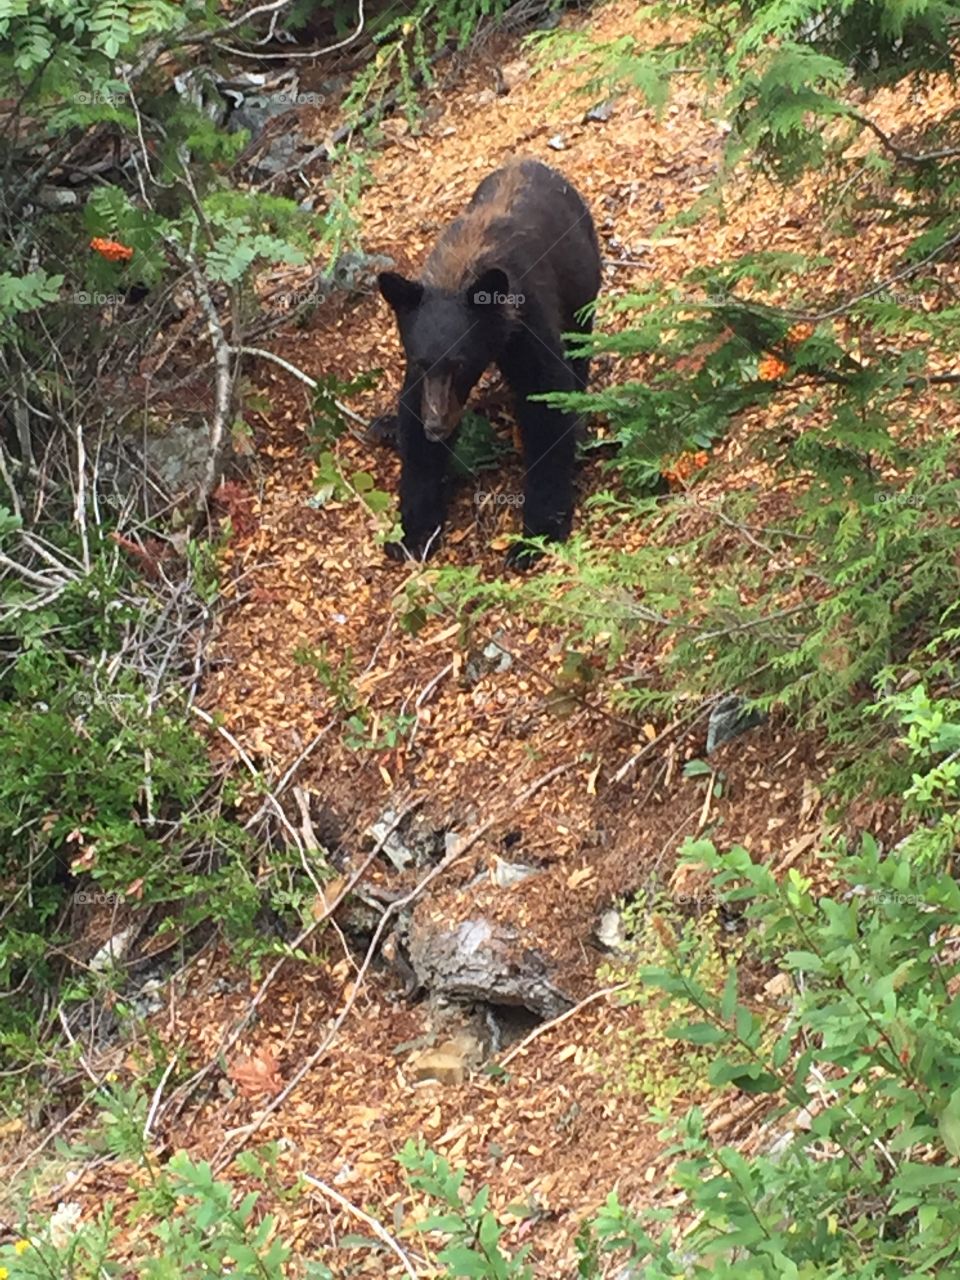 Black bear cub climbing down ridge for red berries, momma bear not in sight 